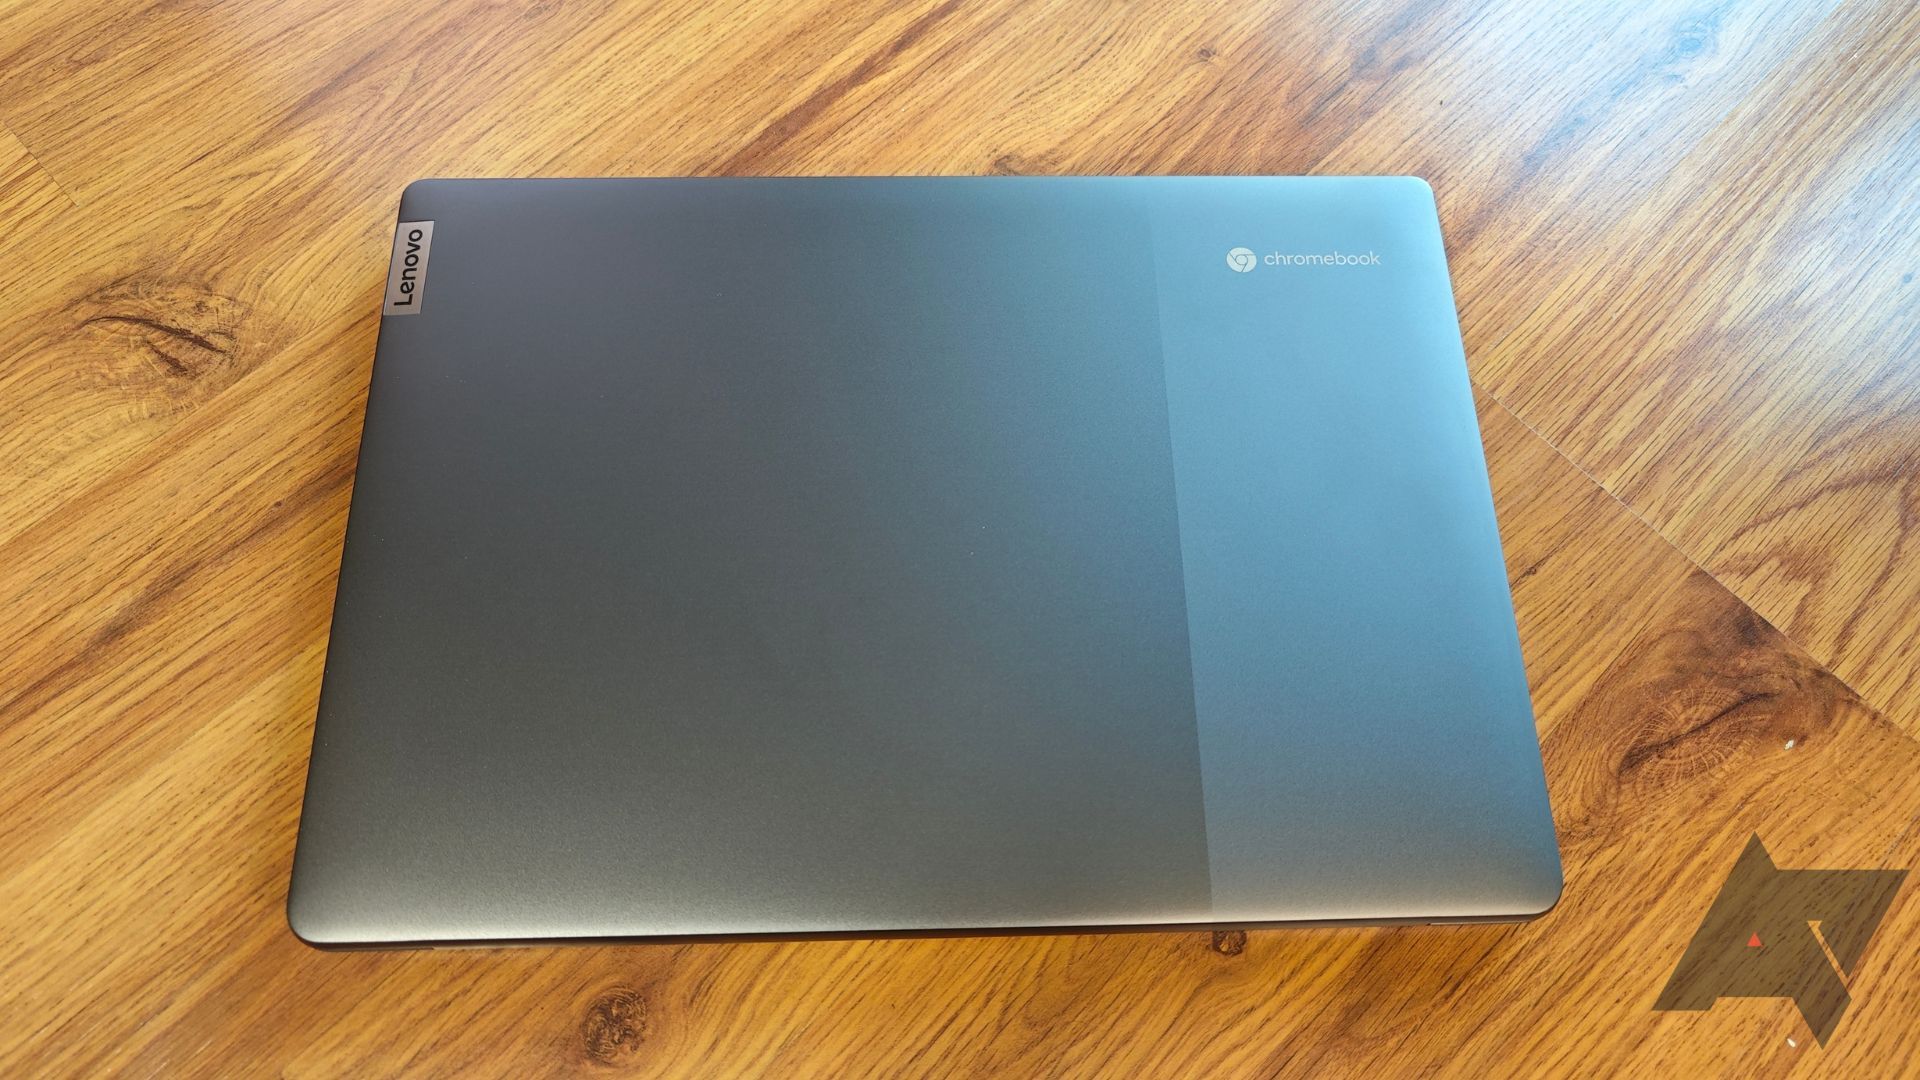 Tampa do Chromebook Lenovo IdeaPad 5i fechada